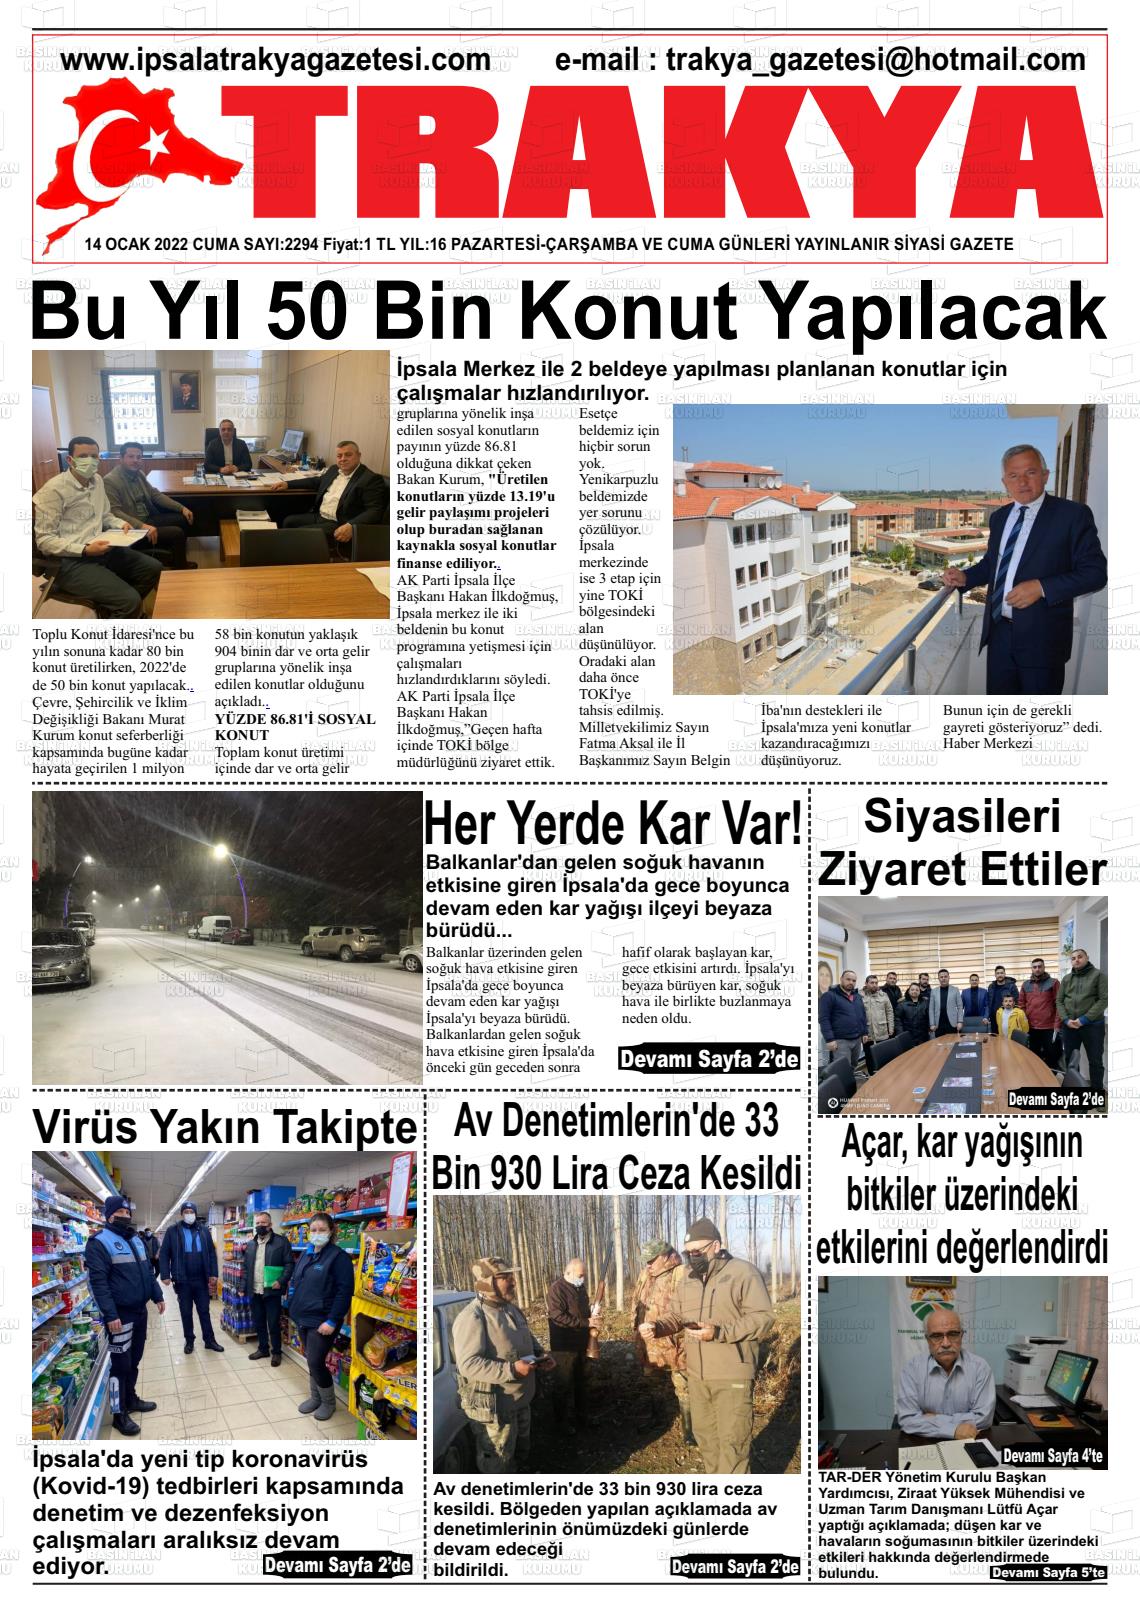 14 Ocak 2022 Trakya Gazete Manşeti